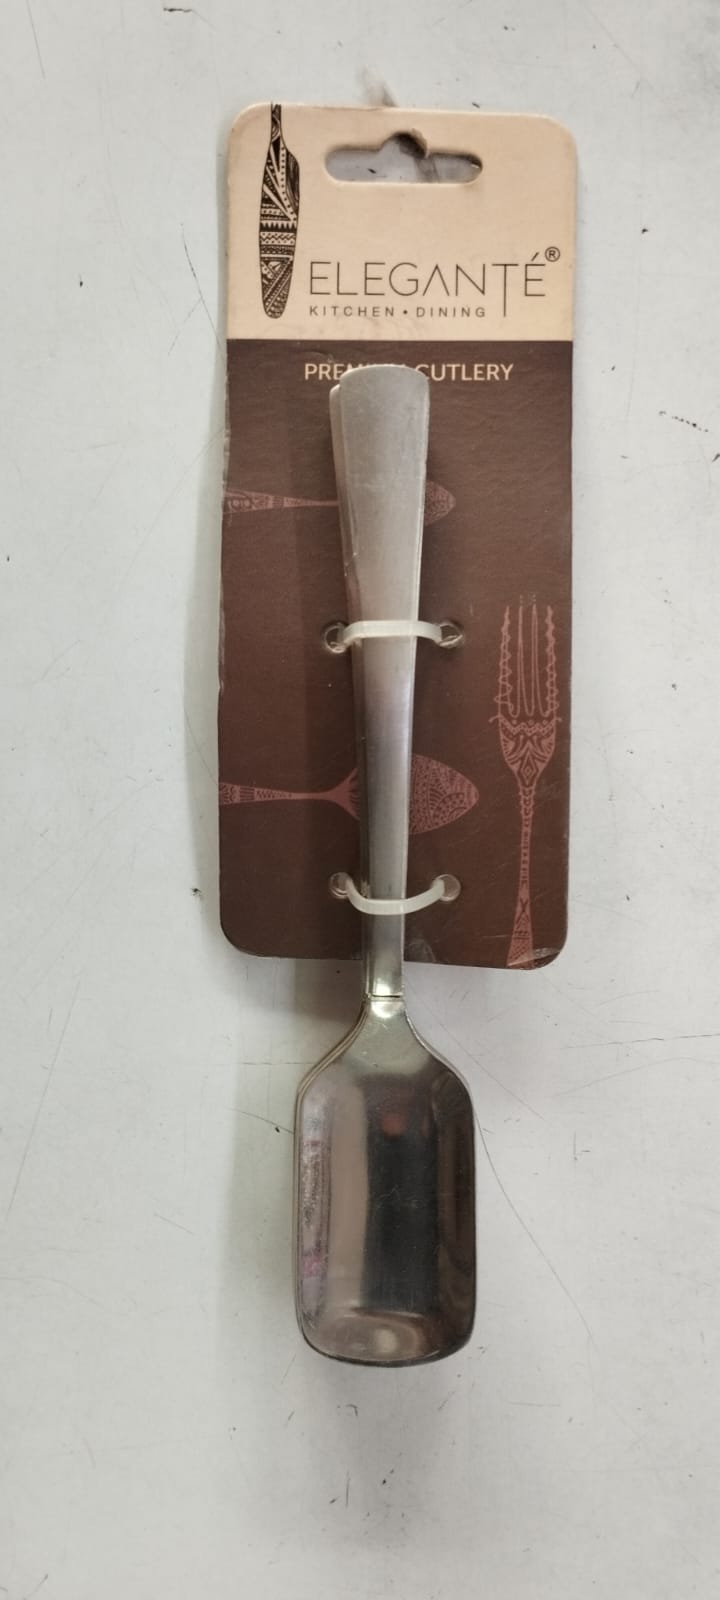 Elegante kitchen dining spoon 